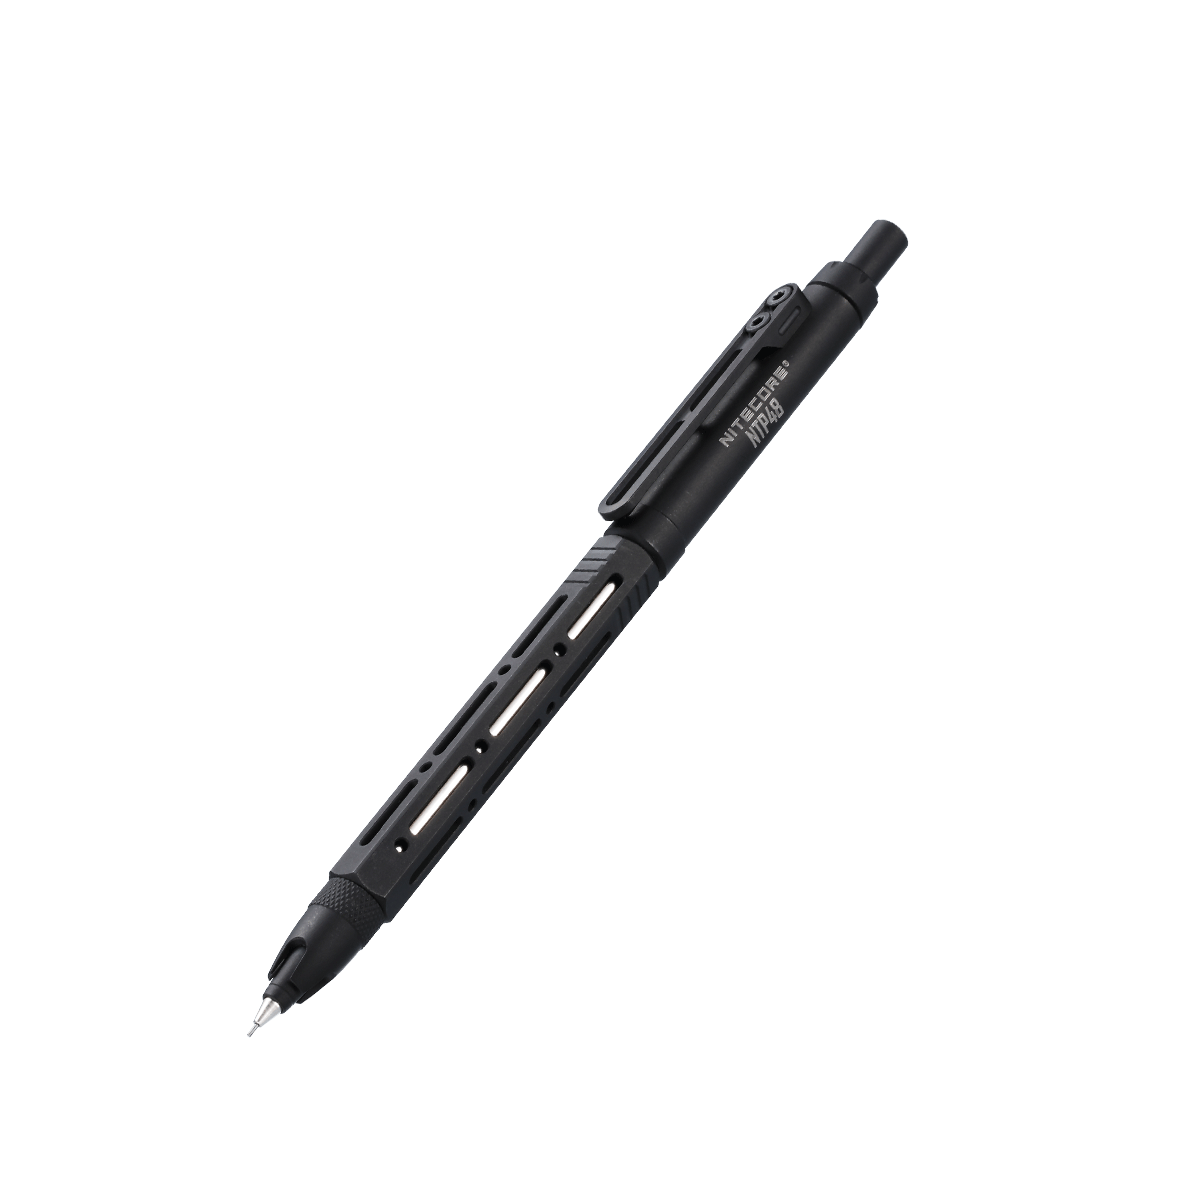 NITECORE NTP48 Titanium Alloy Pocket Tactical Pen Mechanical Pencil Outdoor Hunting Camping Survival Emergency Tools